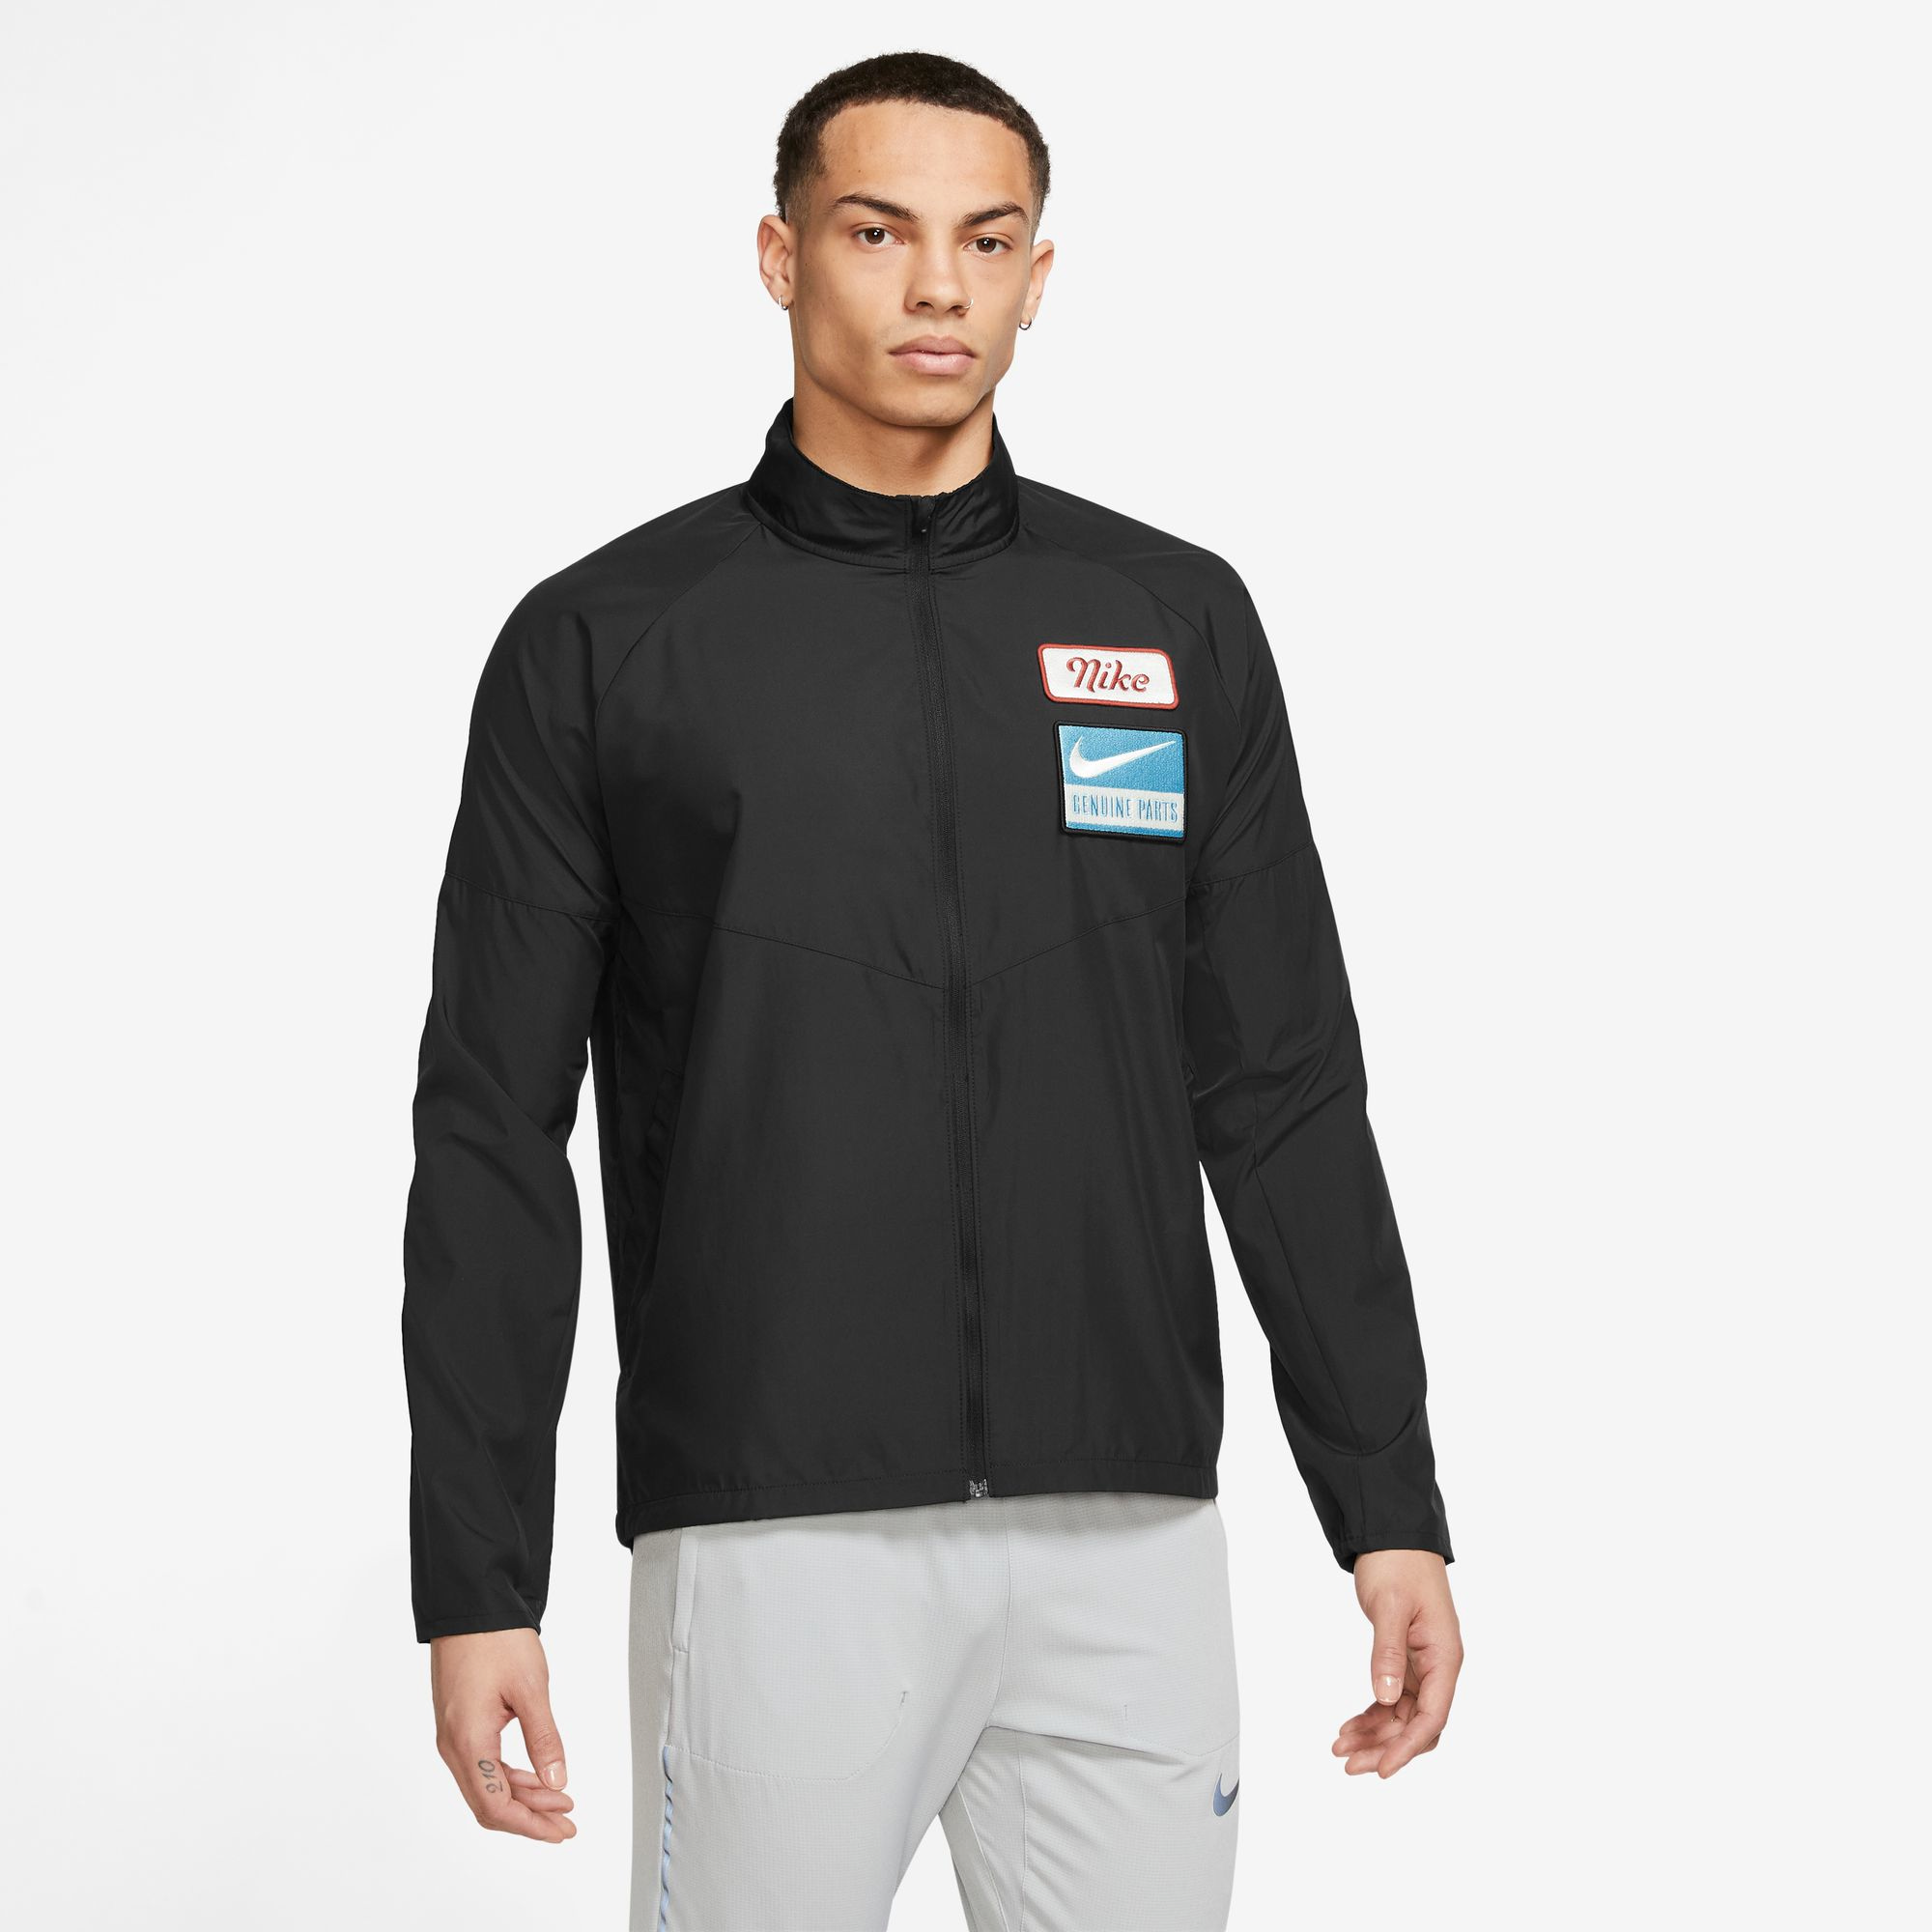 Product model nike dye miler jacket 391319.html | Champs Sports